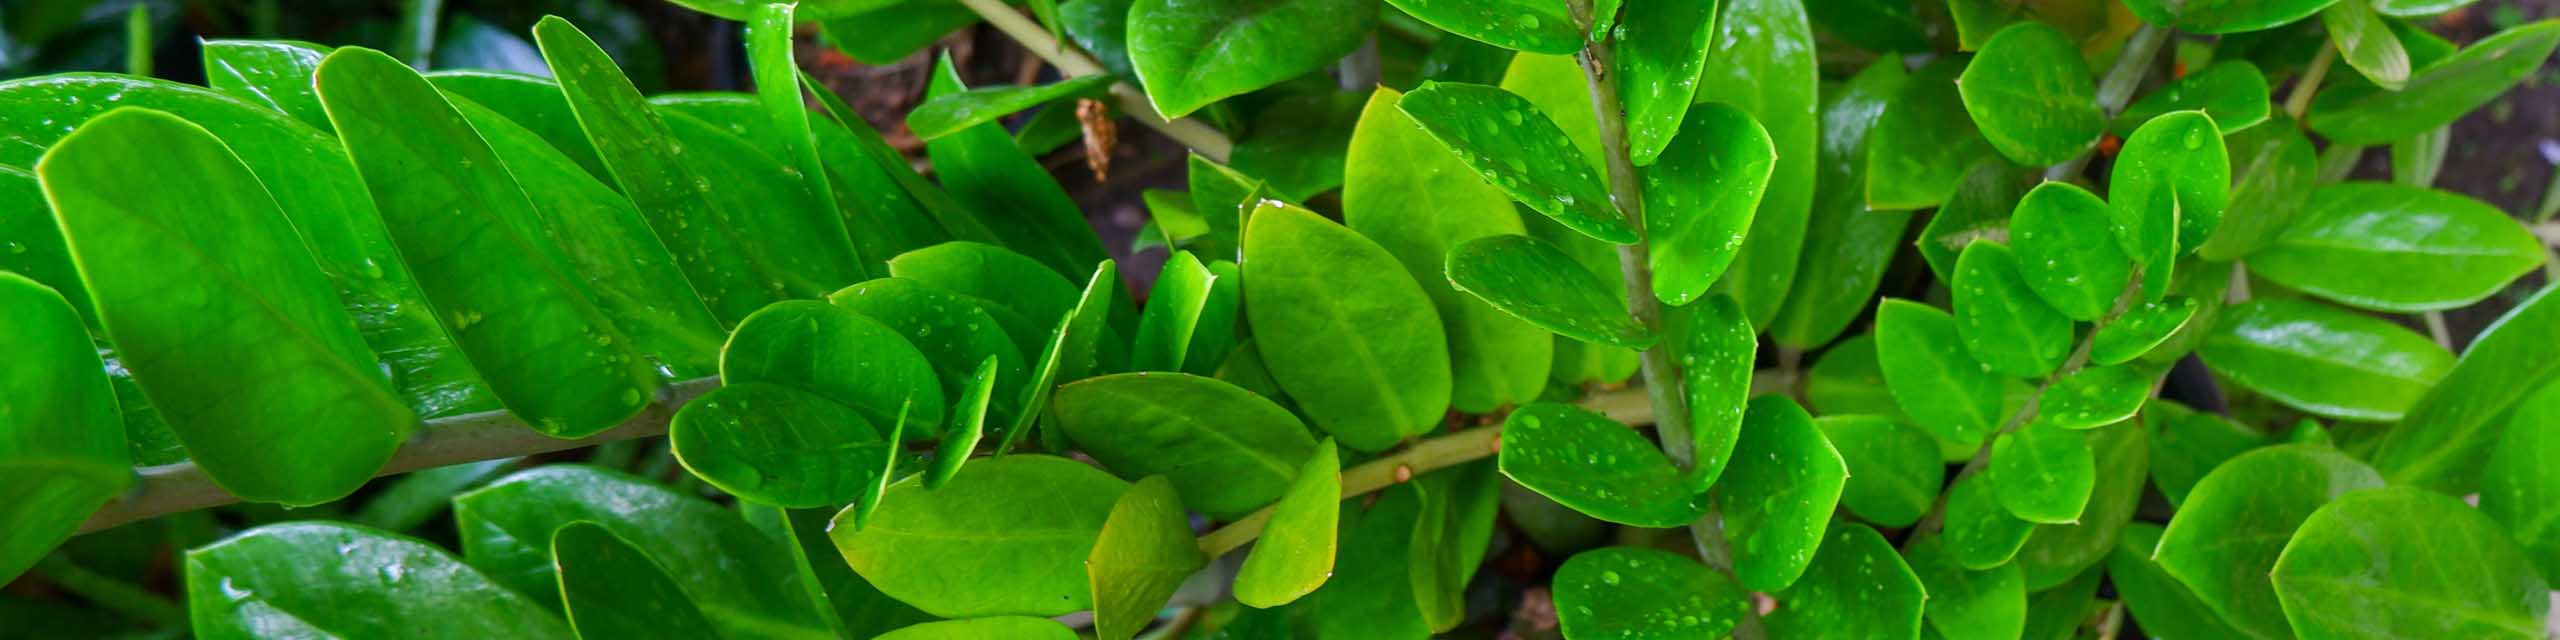 Close up of the green foliage of a ZZ plant (Zamioculcas zamiifolia).